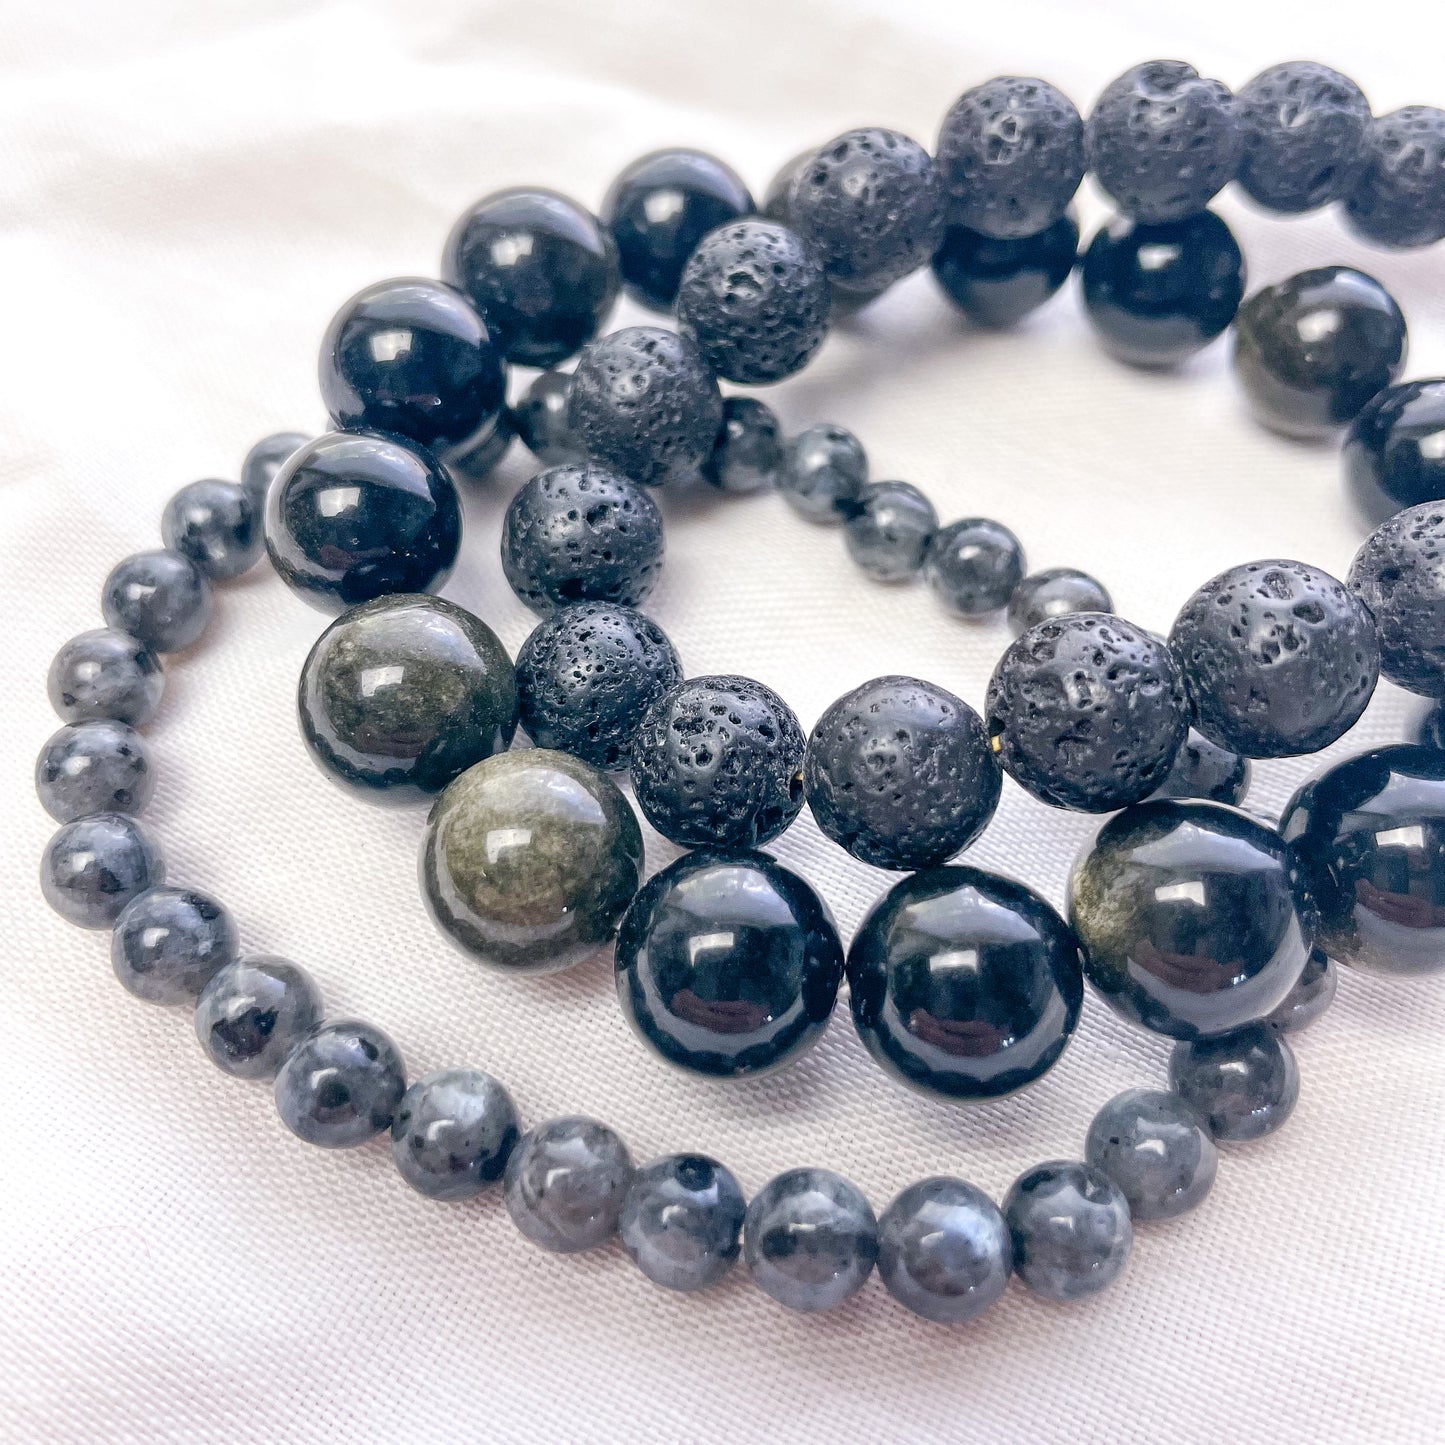 Crystal bead bracelet - Larvikite, lavastone or gold sheen obsidian